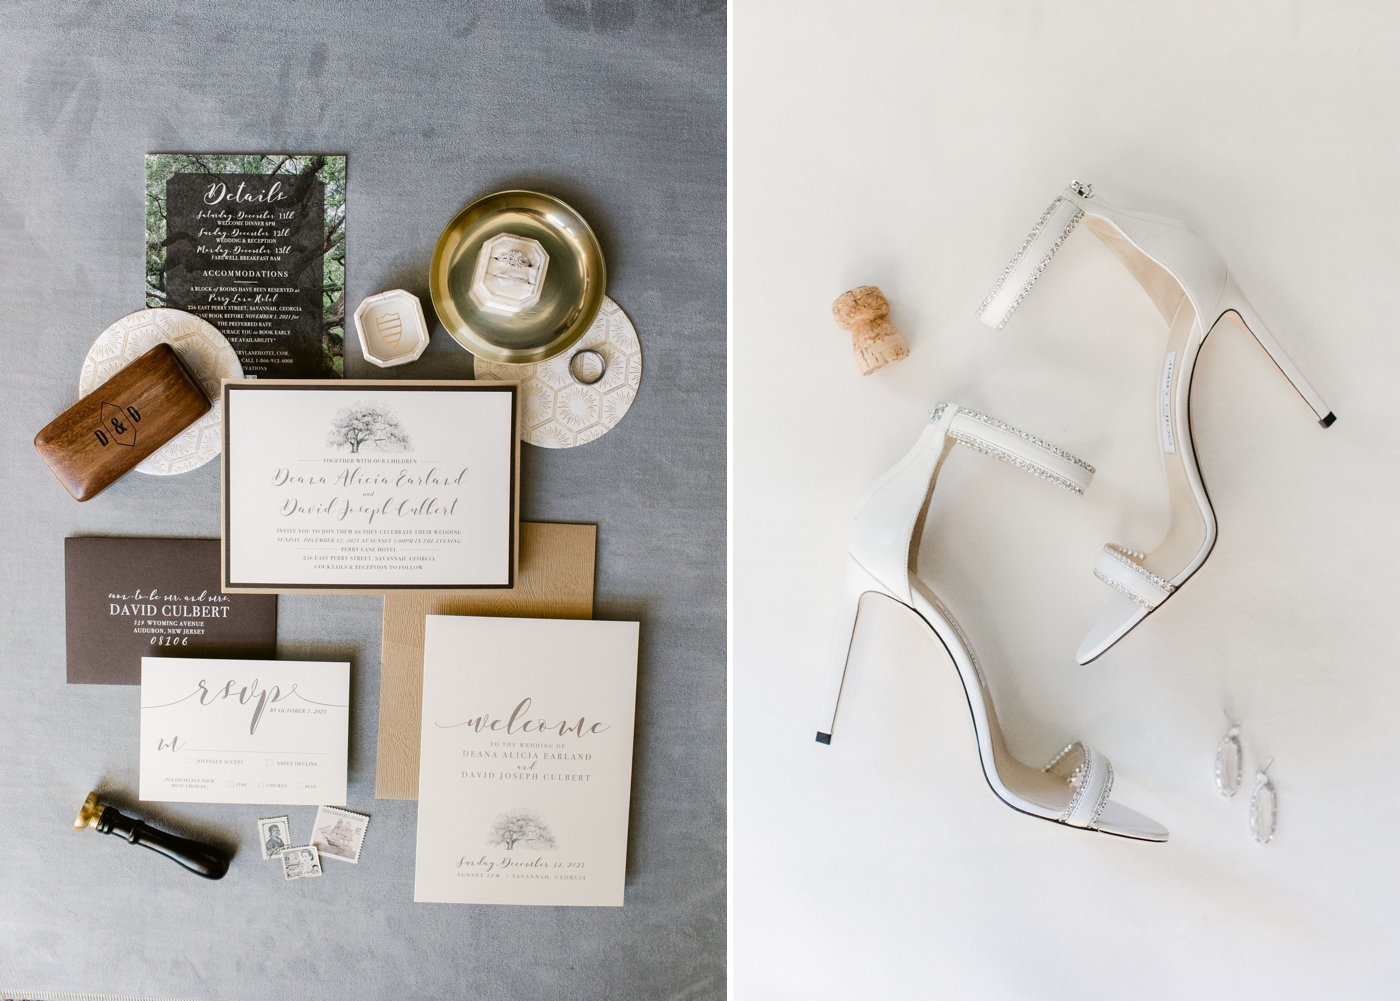 Wedding invitations for a Savannah wedding by Kristin Nicole Graphic Designs